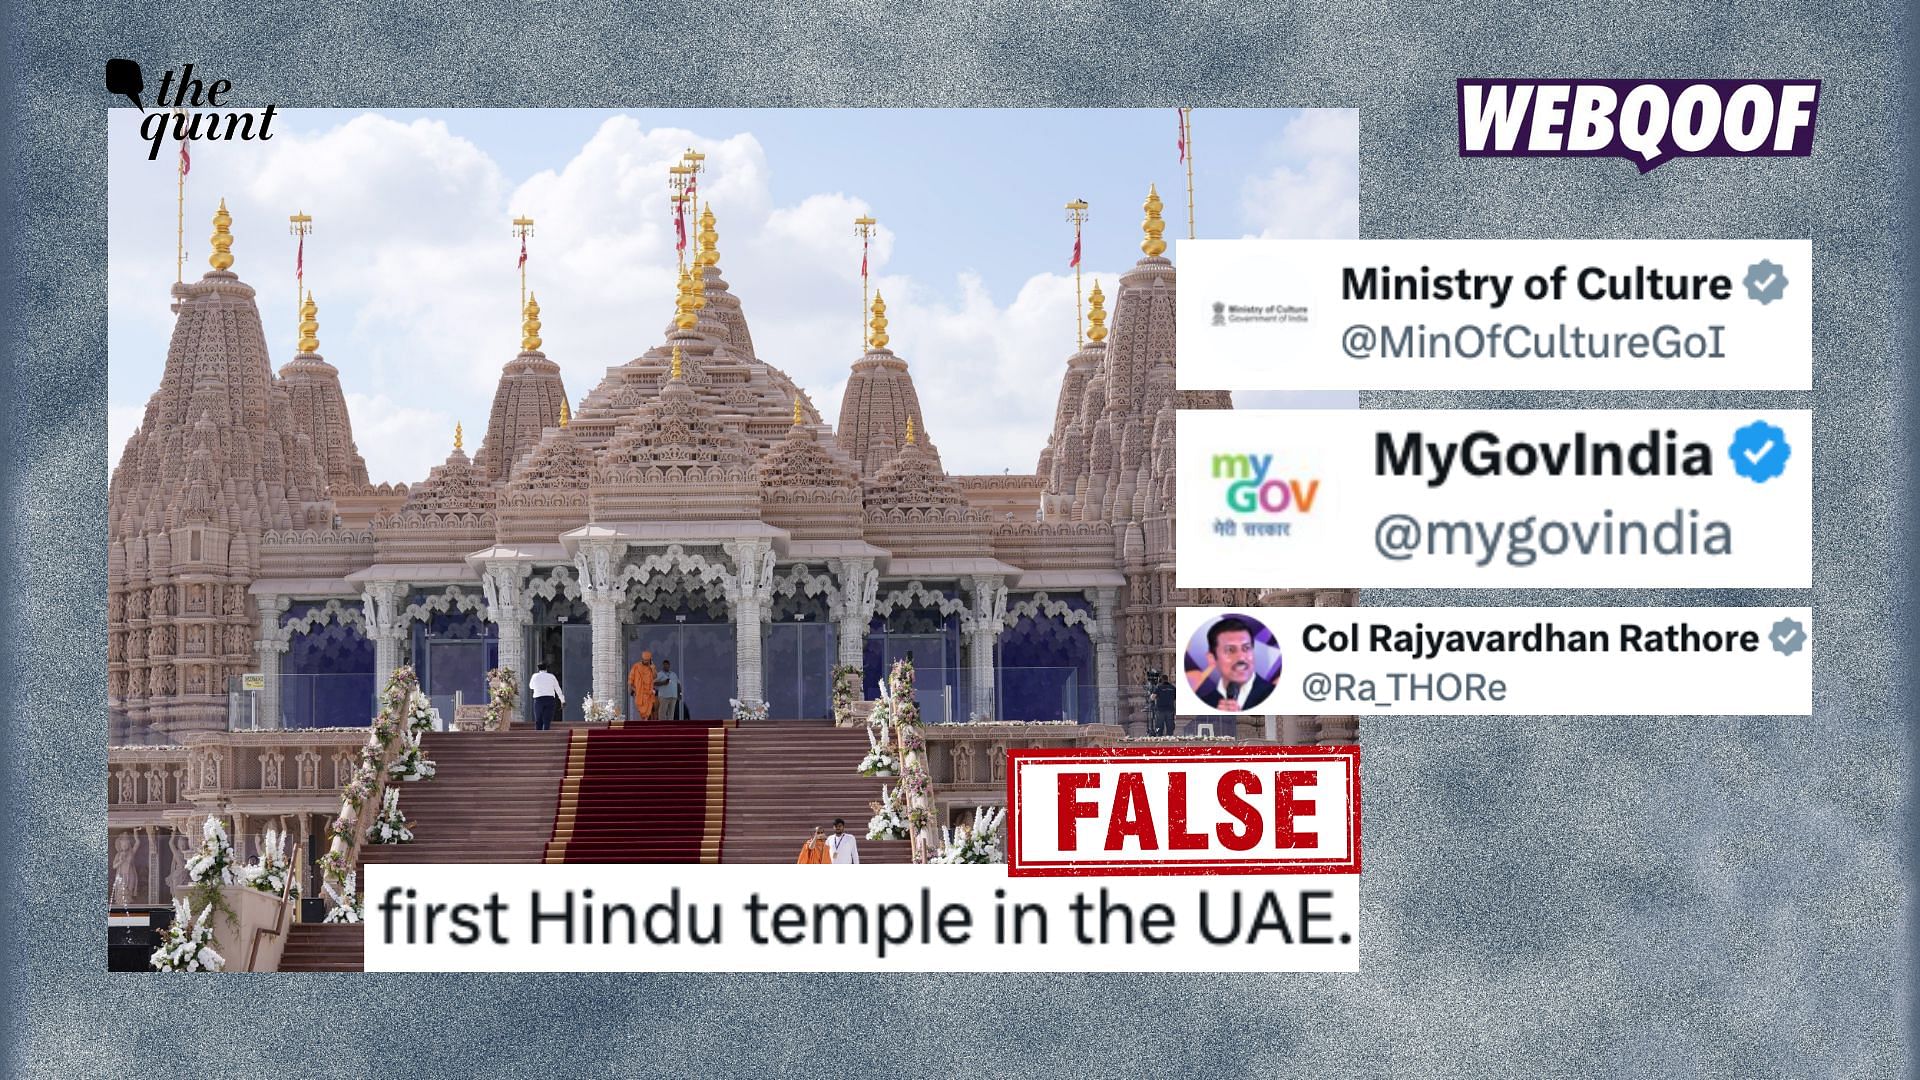 <div class="paragraphs"><p>The false claim that BAPS Hindu Mandir is UAE's first Hindu temple has gone viral.</p></div>